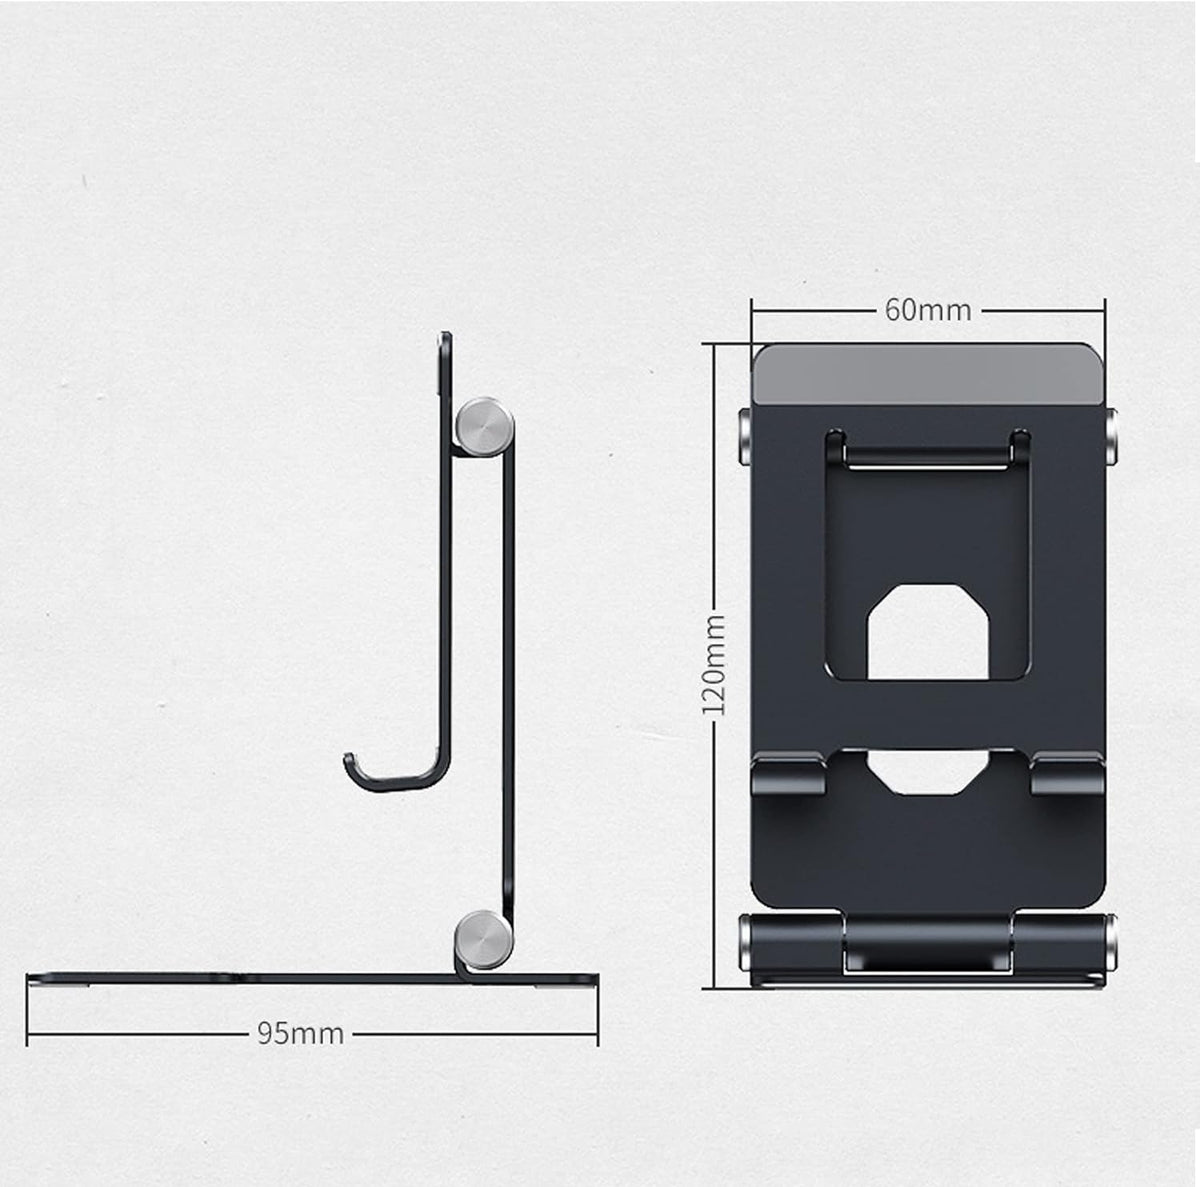 Aluminium Alloy Desktop Stand for Phones (silver)